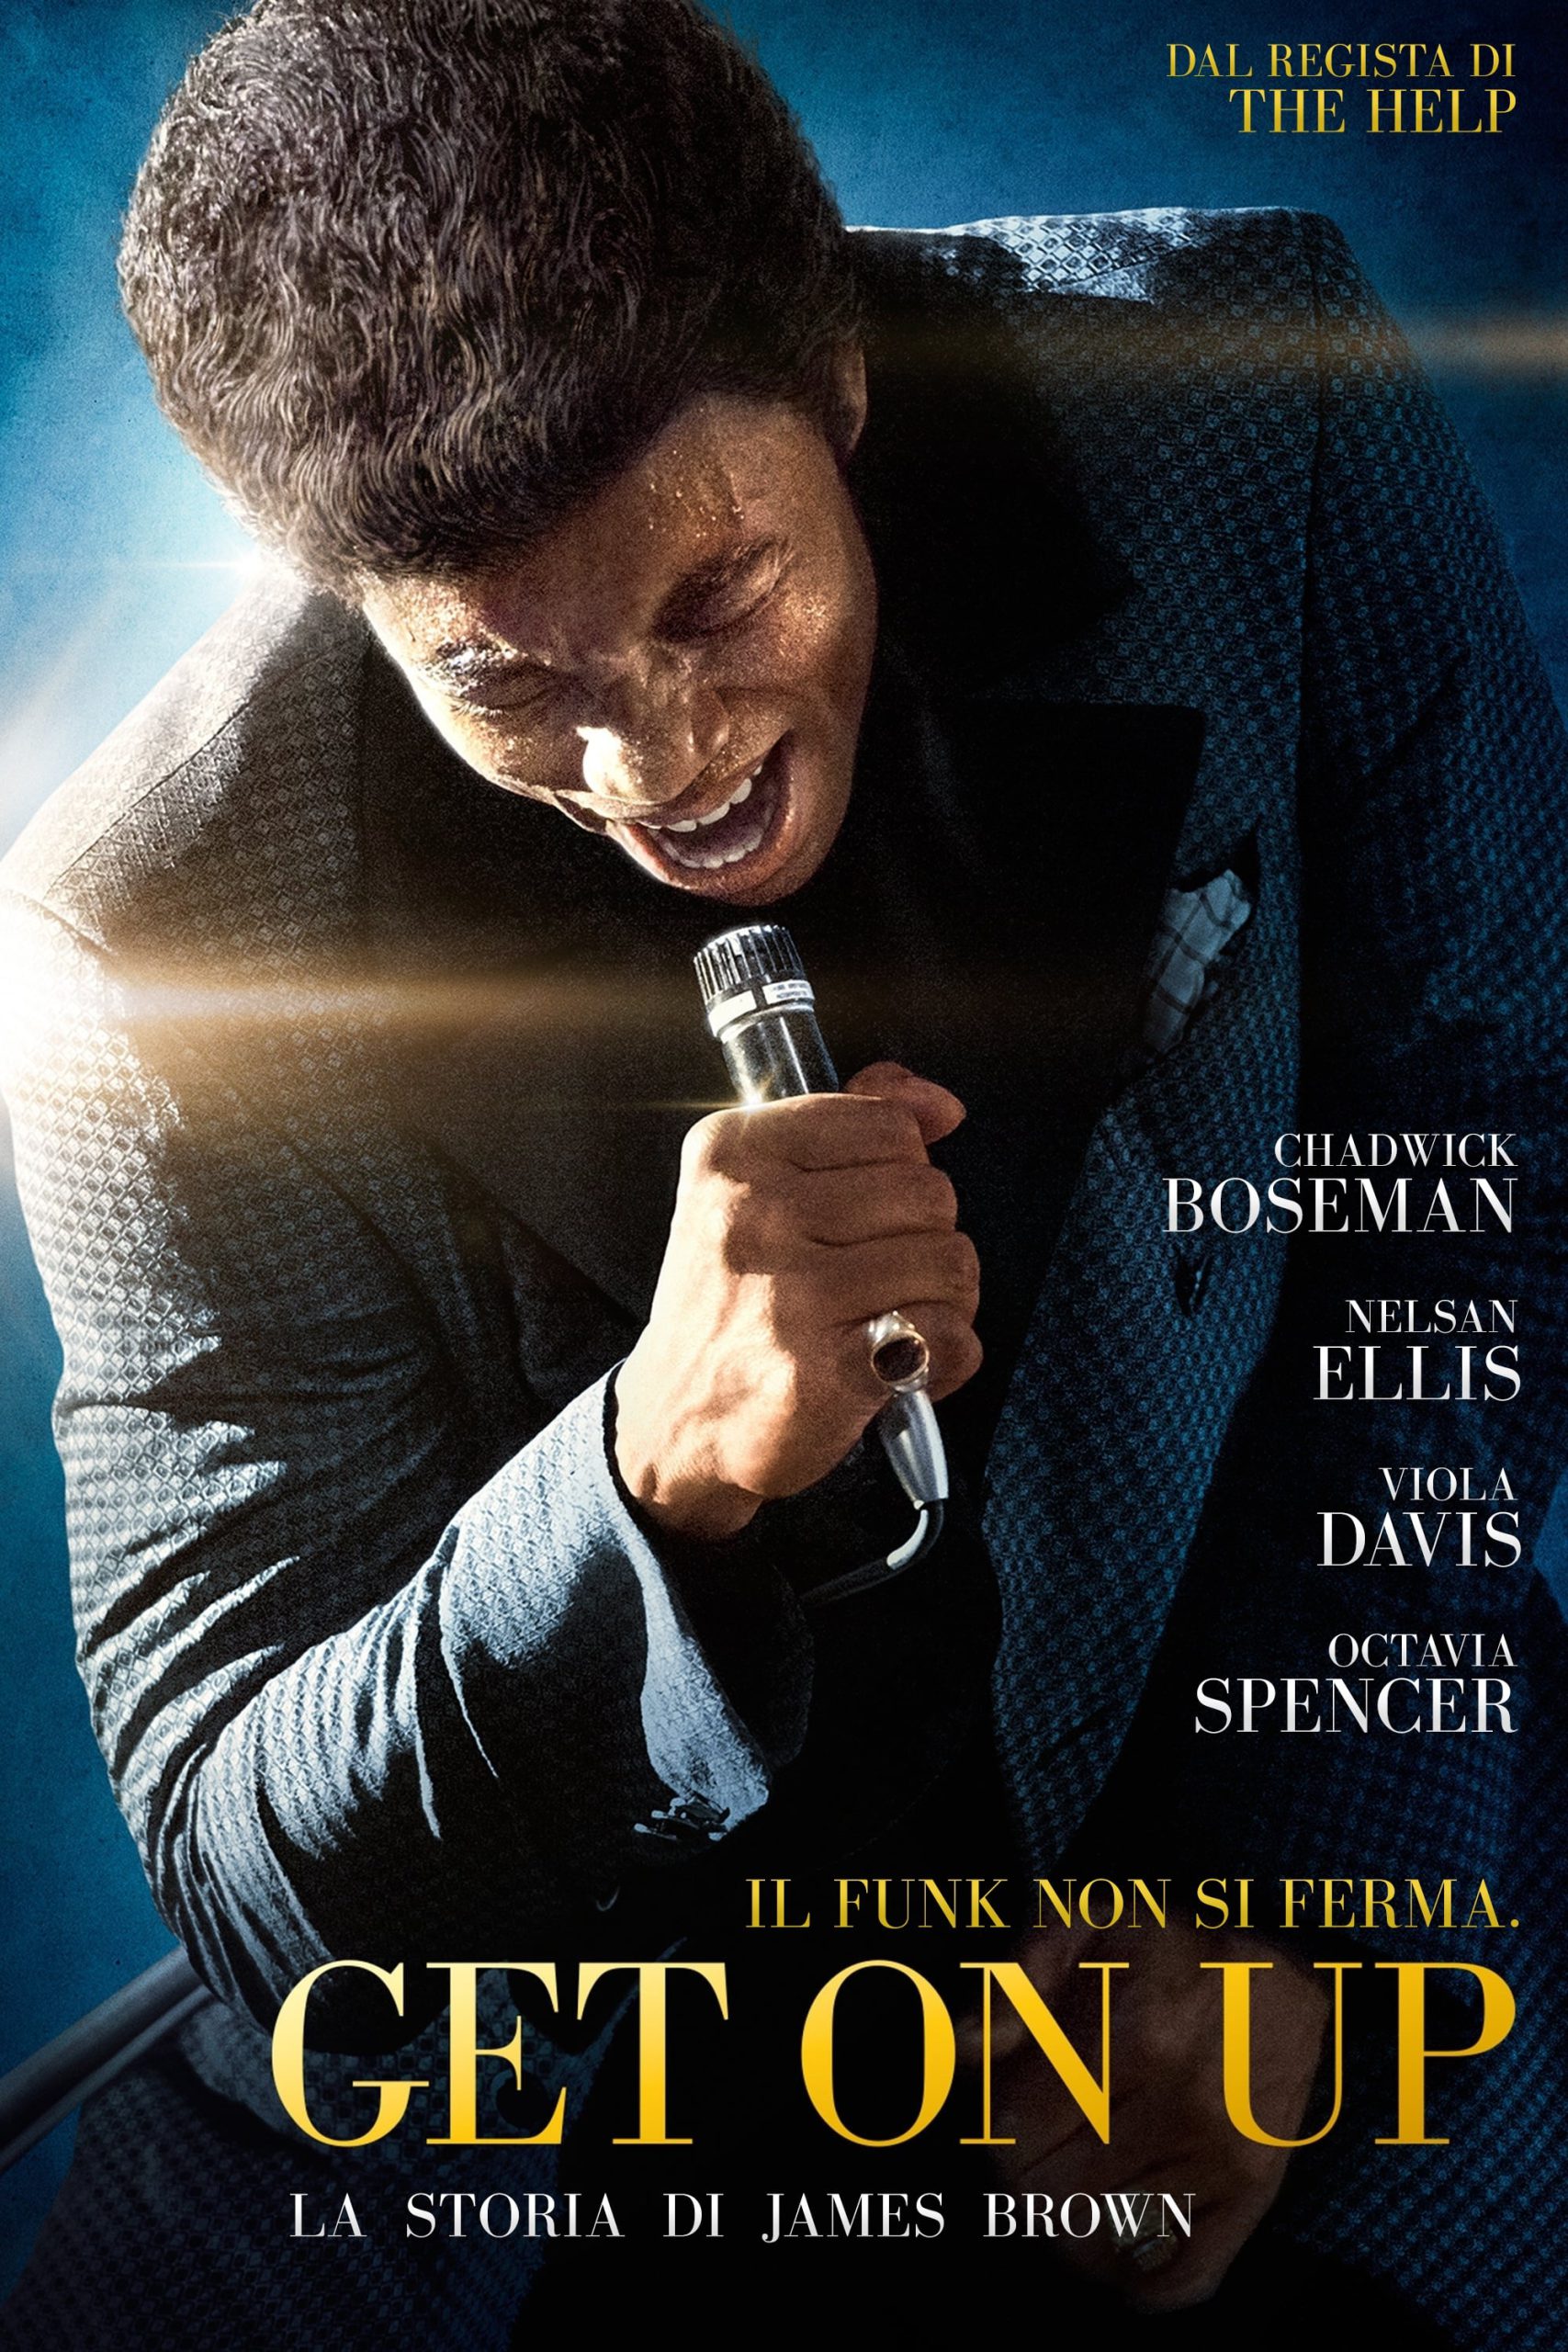 Get on Up – La storia di James Brown [HD] (2014)